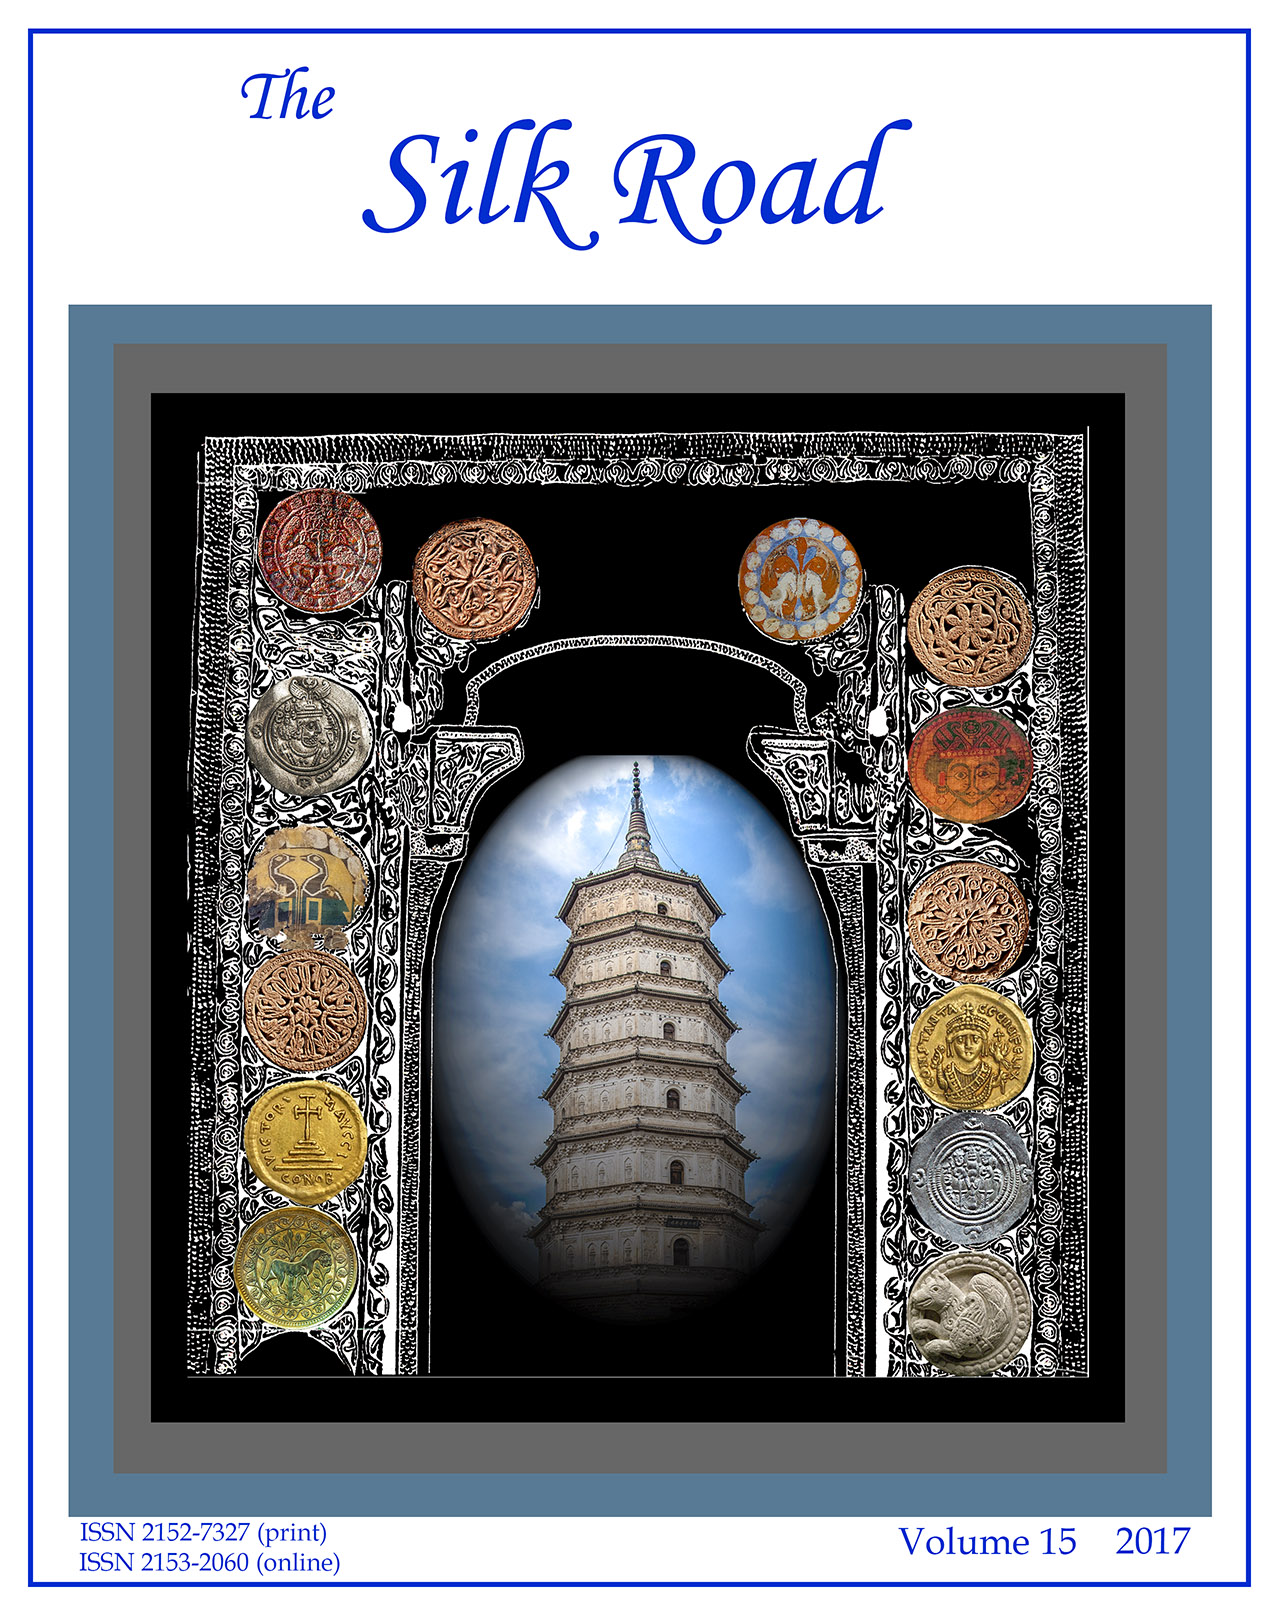 The Silk Road, Volume 15, 2017